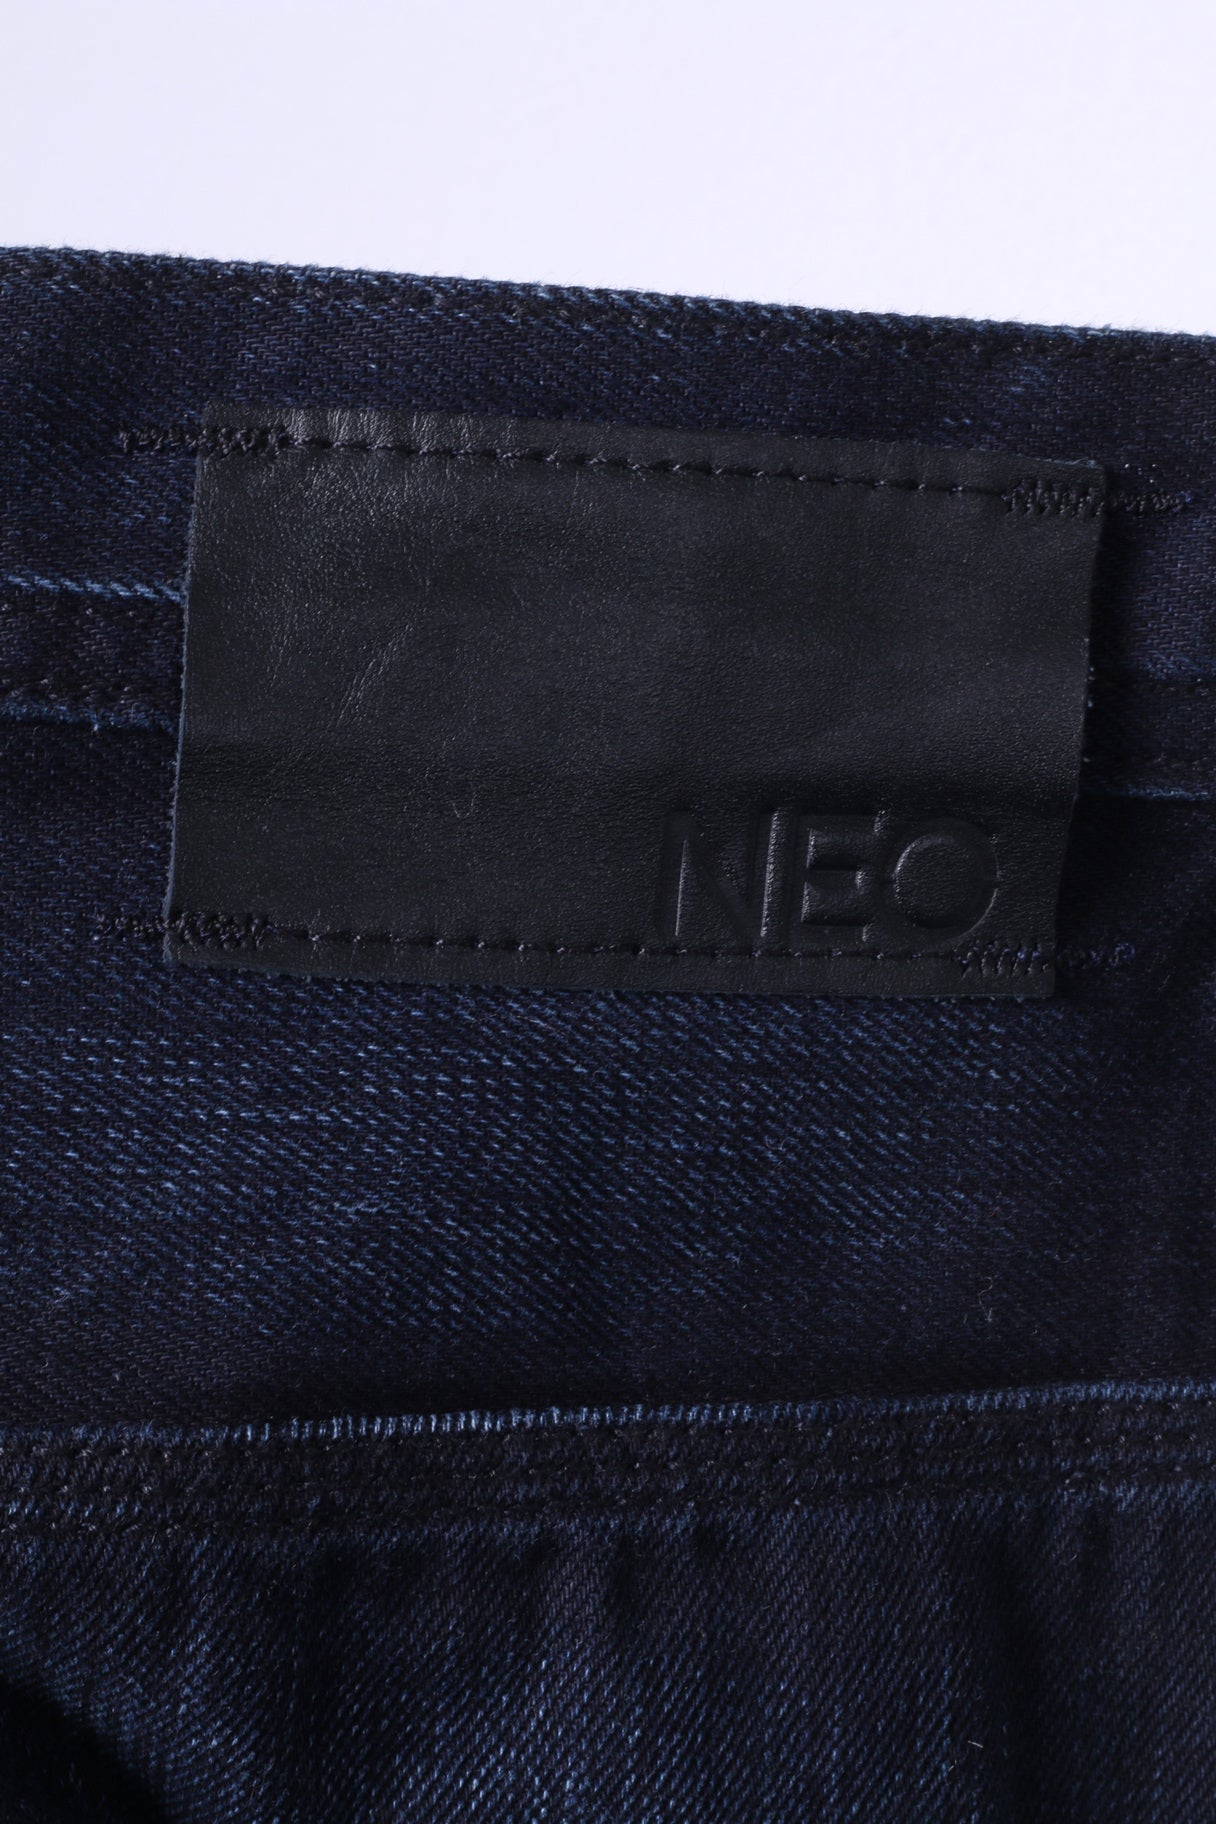 Adidas NEO Drop Crotch Mens W30 L32 Jeans Trousers Navy Cotton Pants